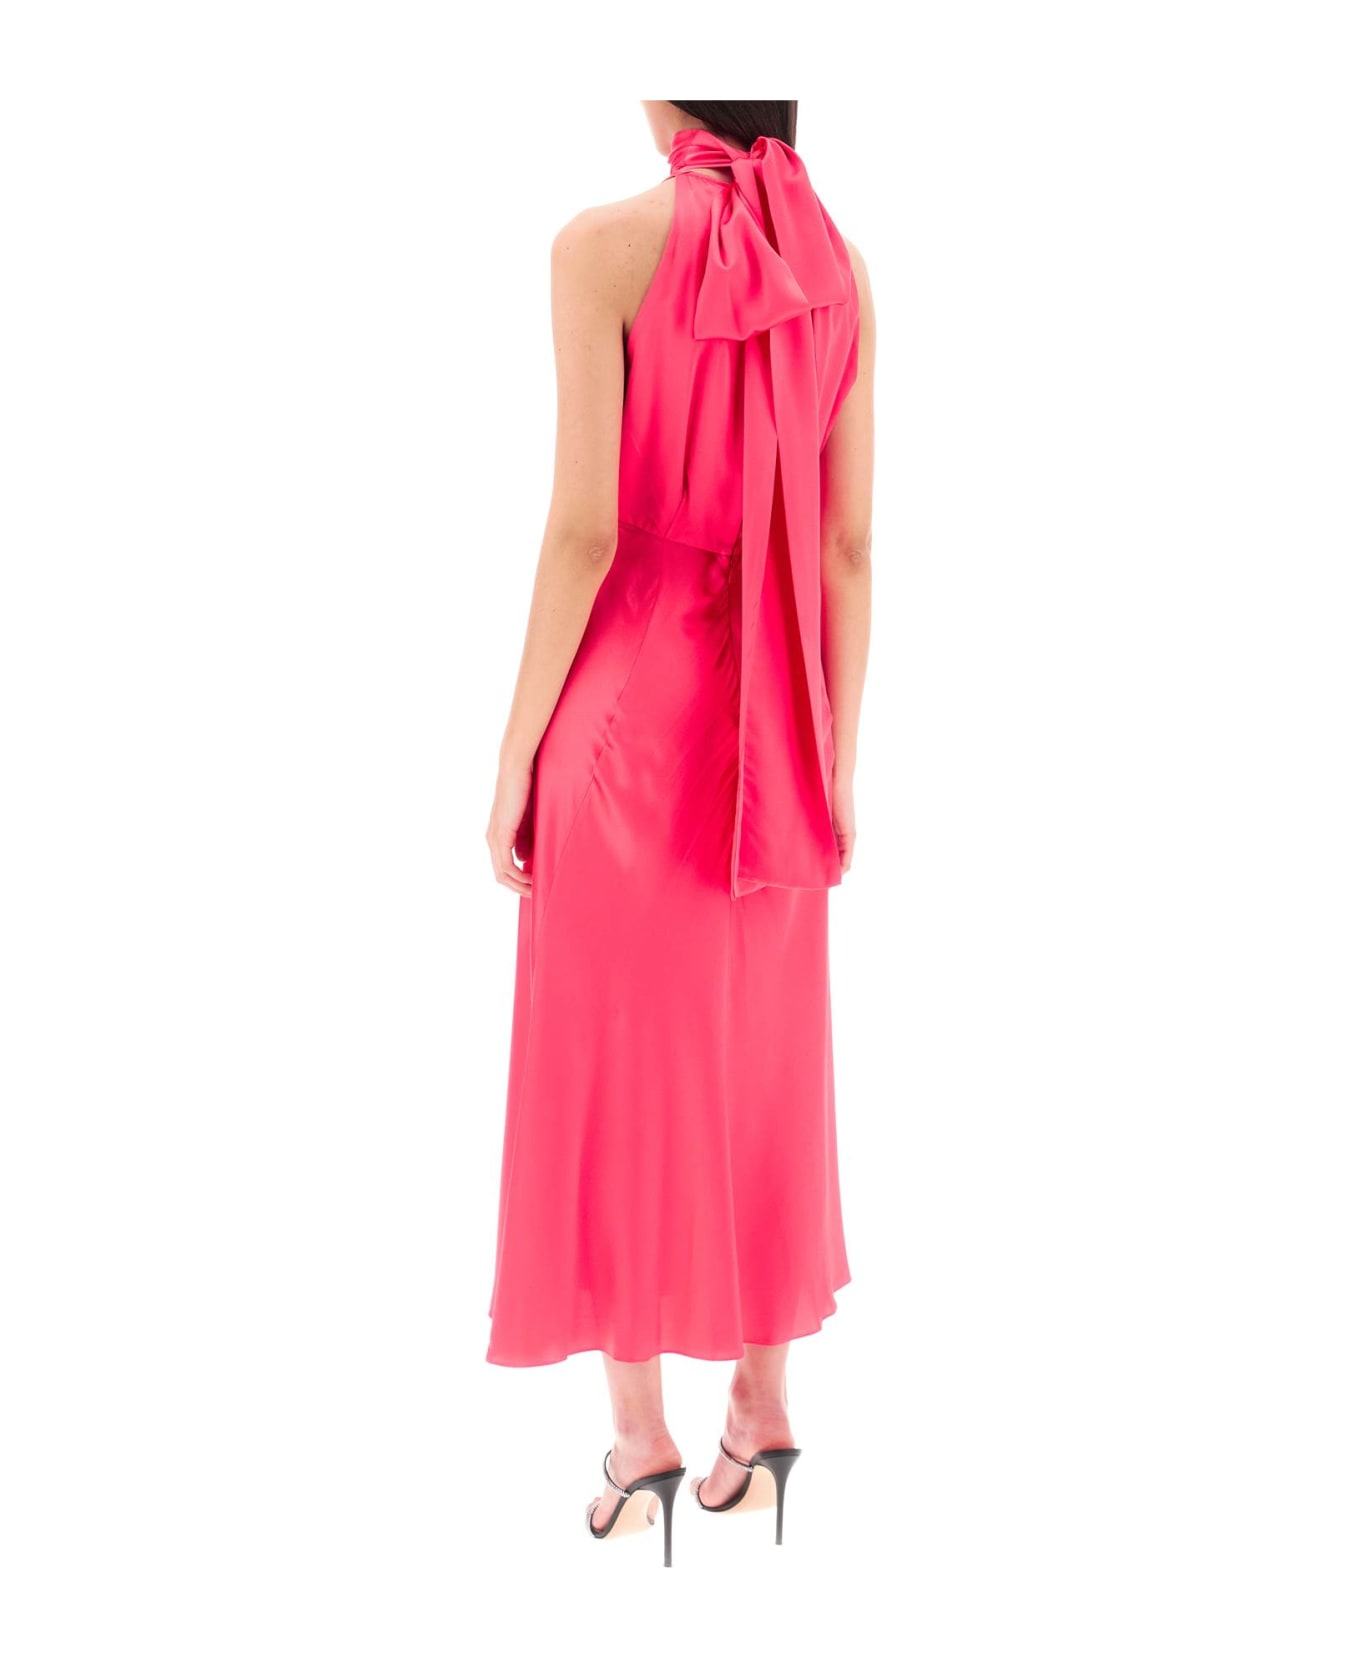 Saloni 'michelle' Satin Dress - MELON (Pink)